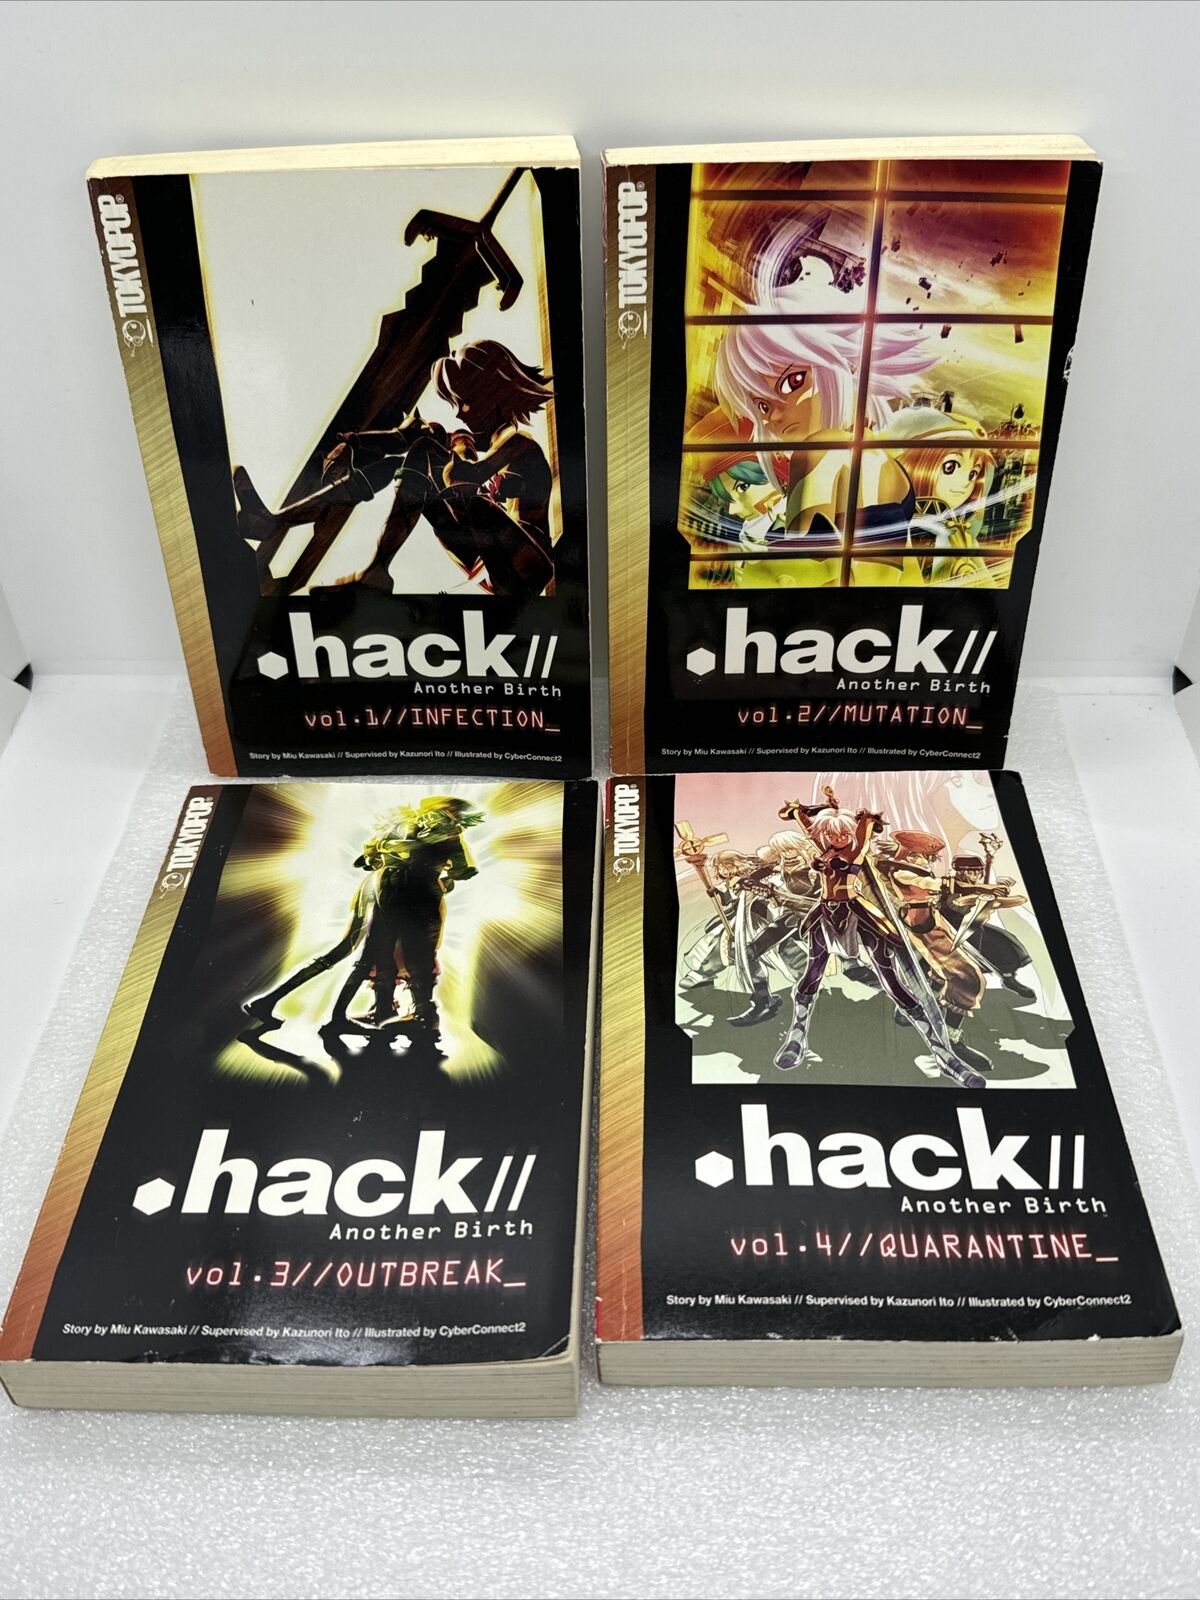 .hack Another Birth Vol 1-4 By Miu Kawaski Tokyo Pop Set Of 4 Books 2007